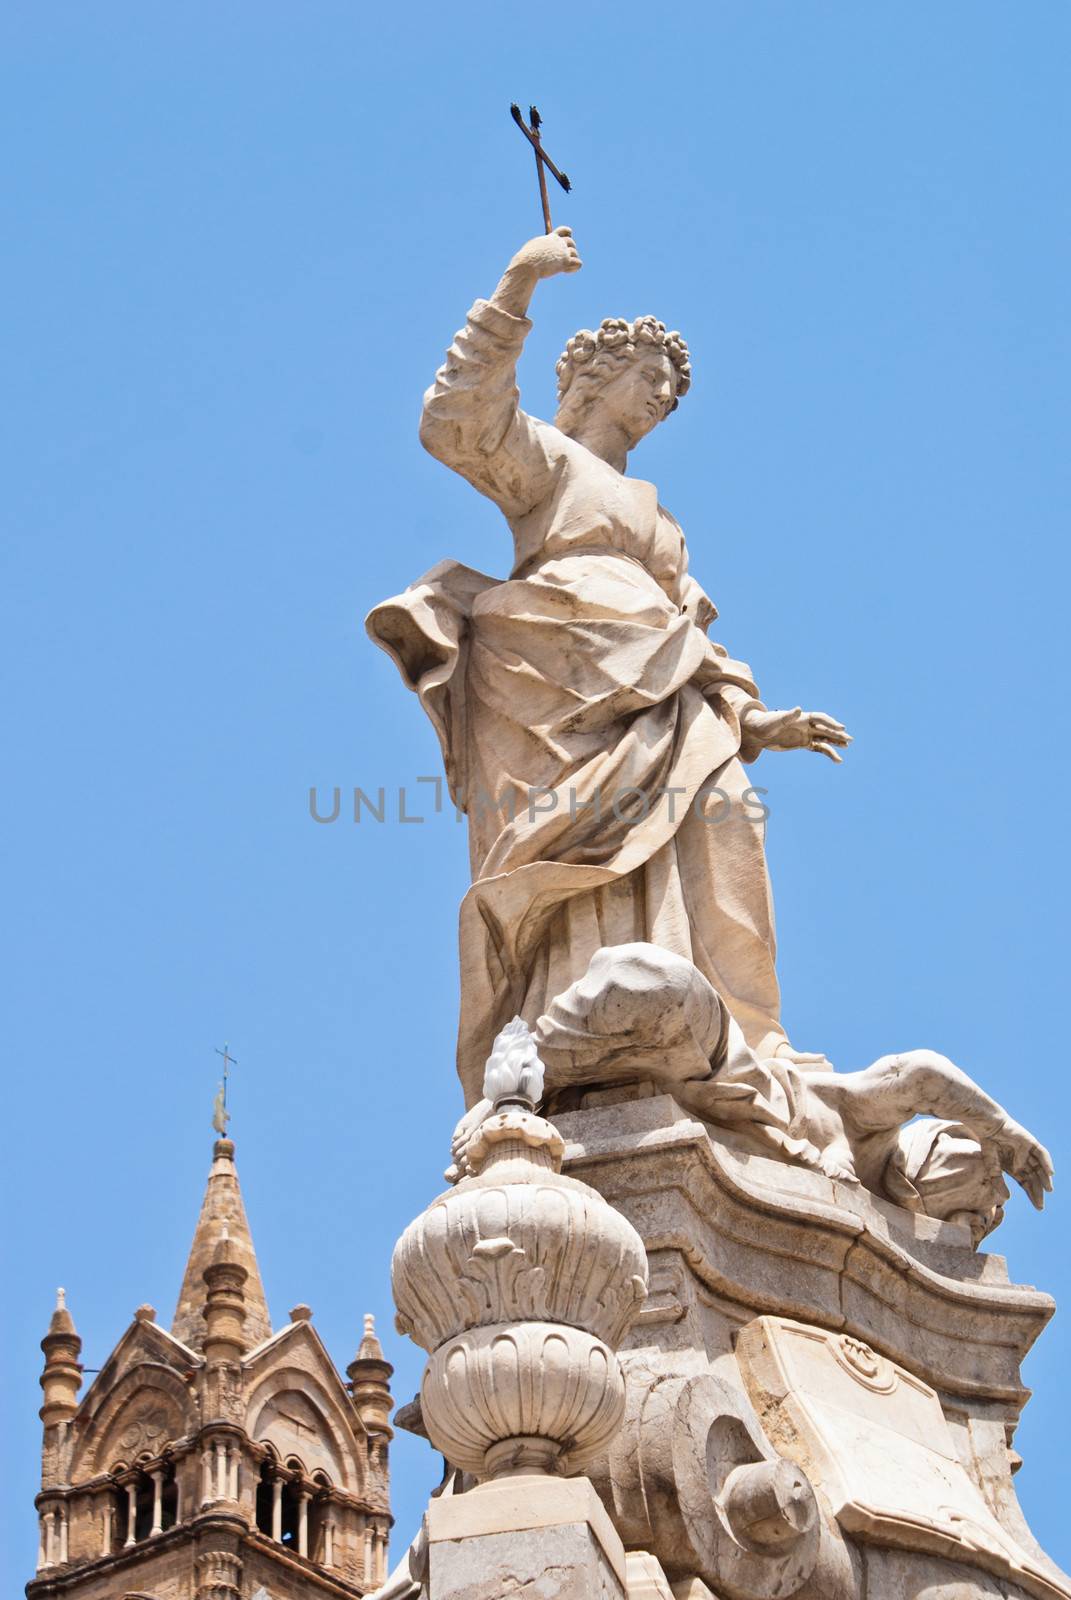 Statue of Santa Rosalia next to the cathedral of Palermo by gandolfocannatella